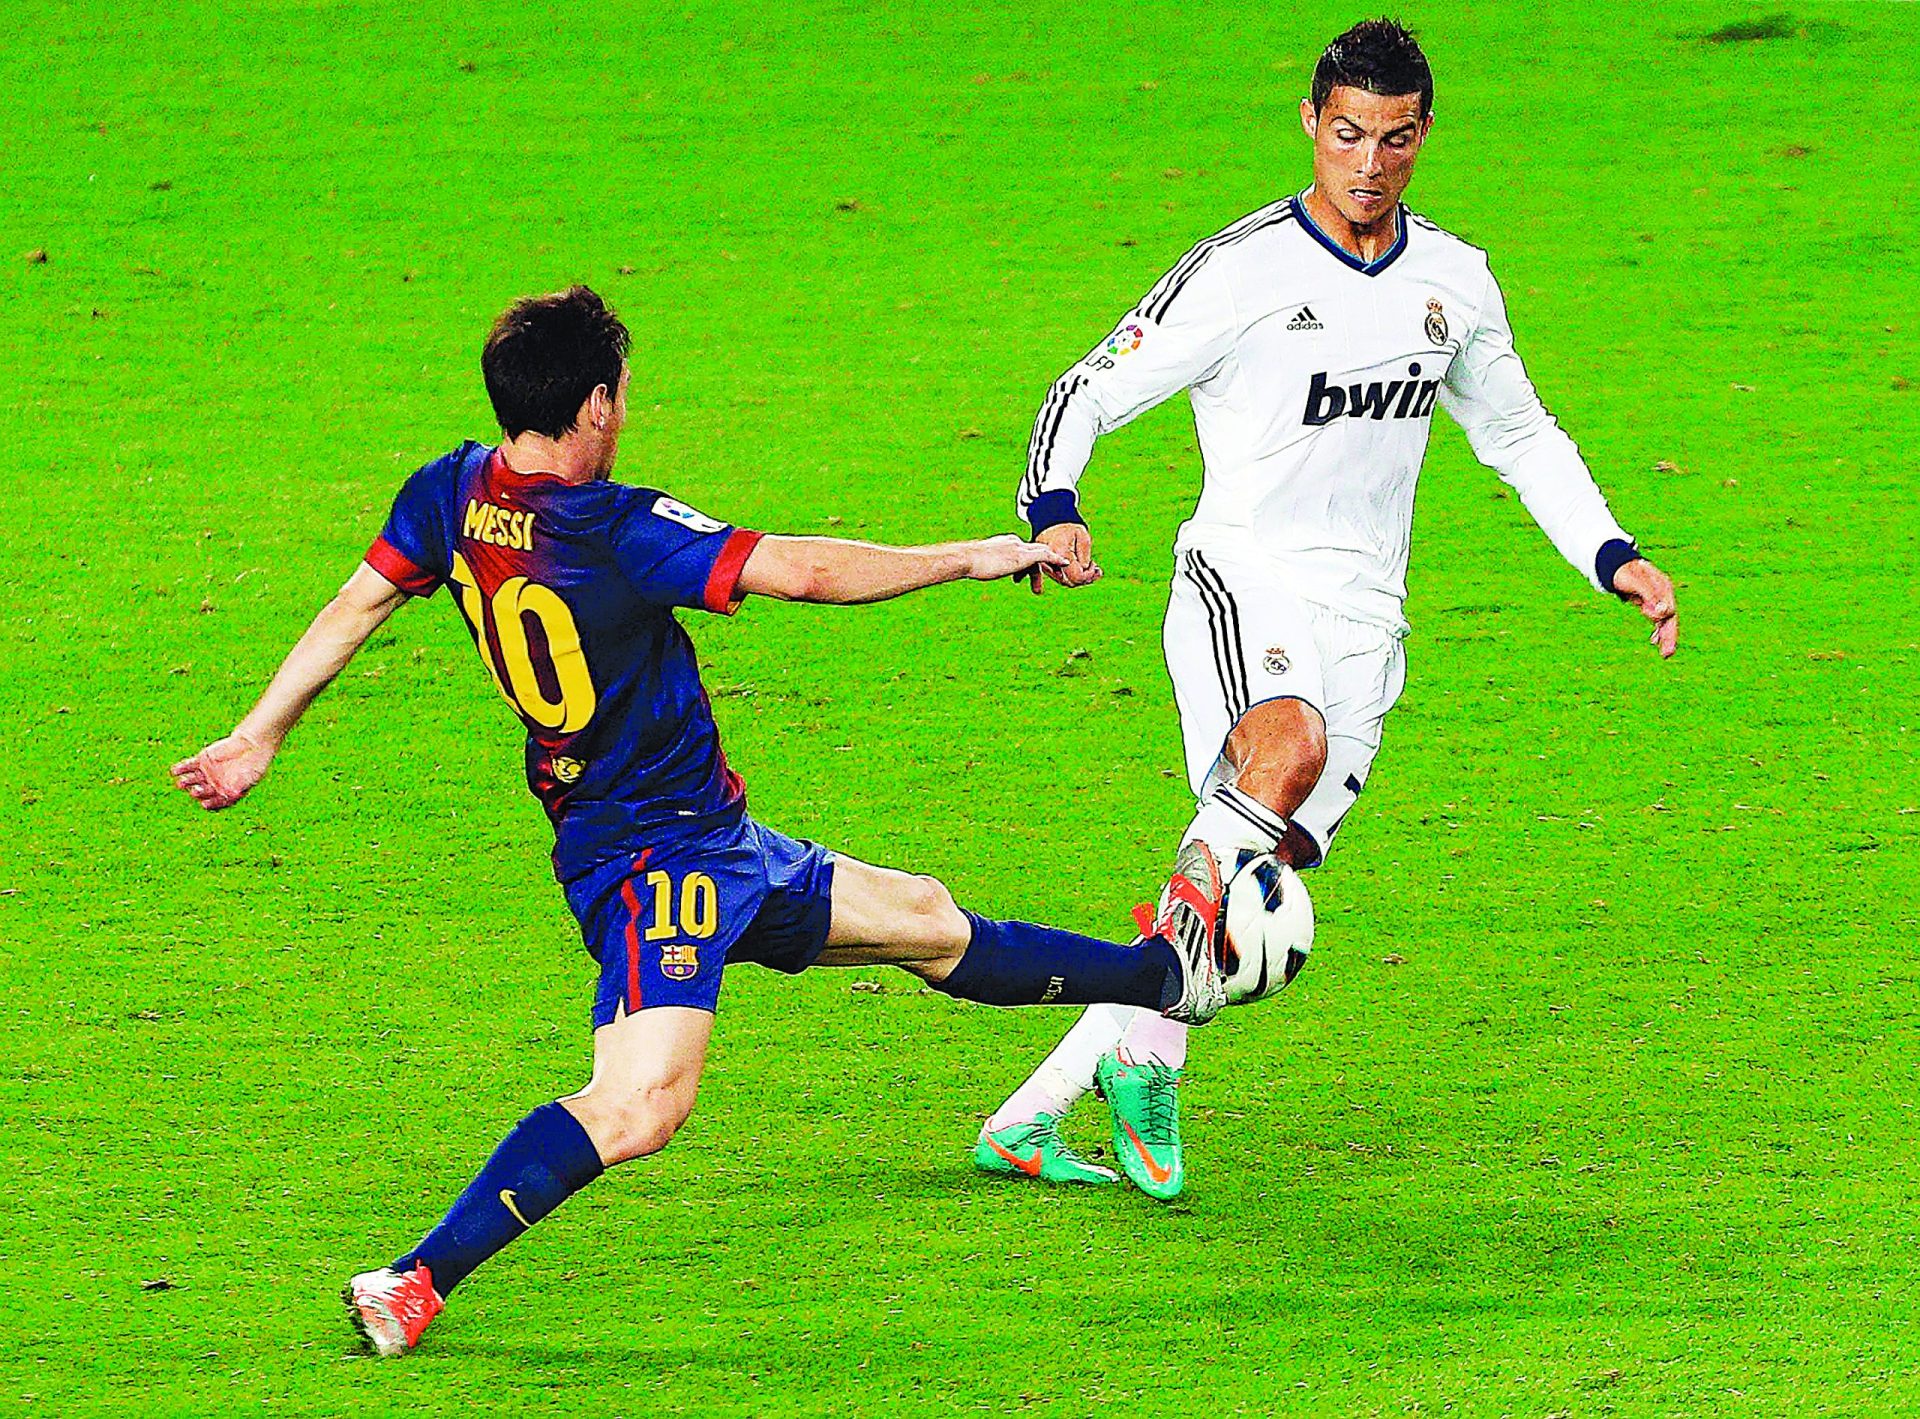 27.º round: Ronaldo VS Messi